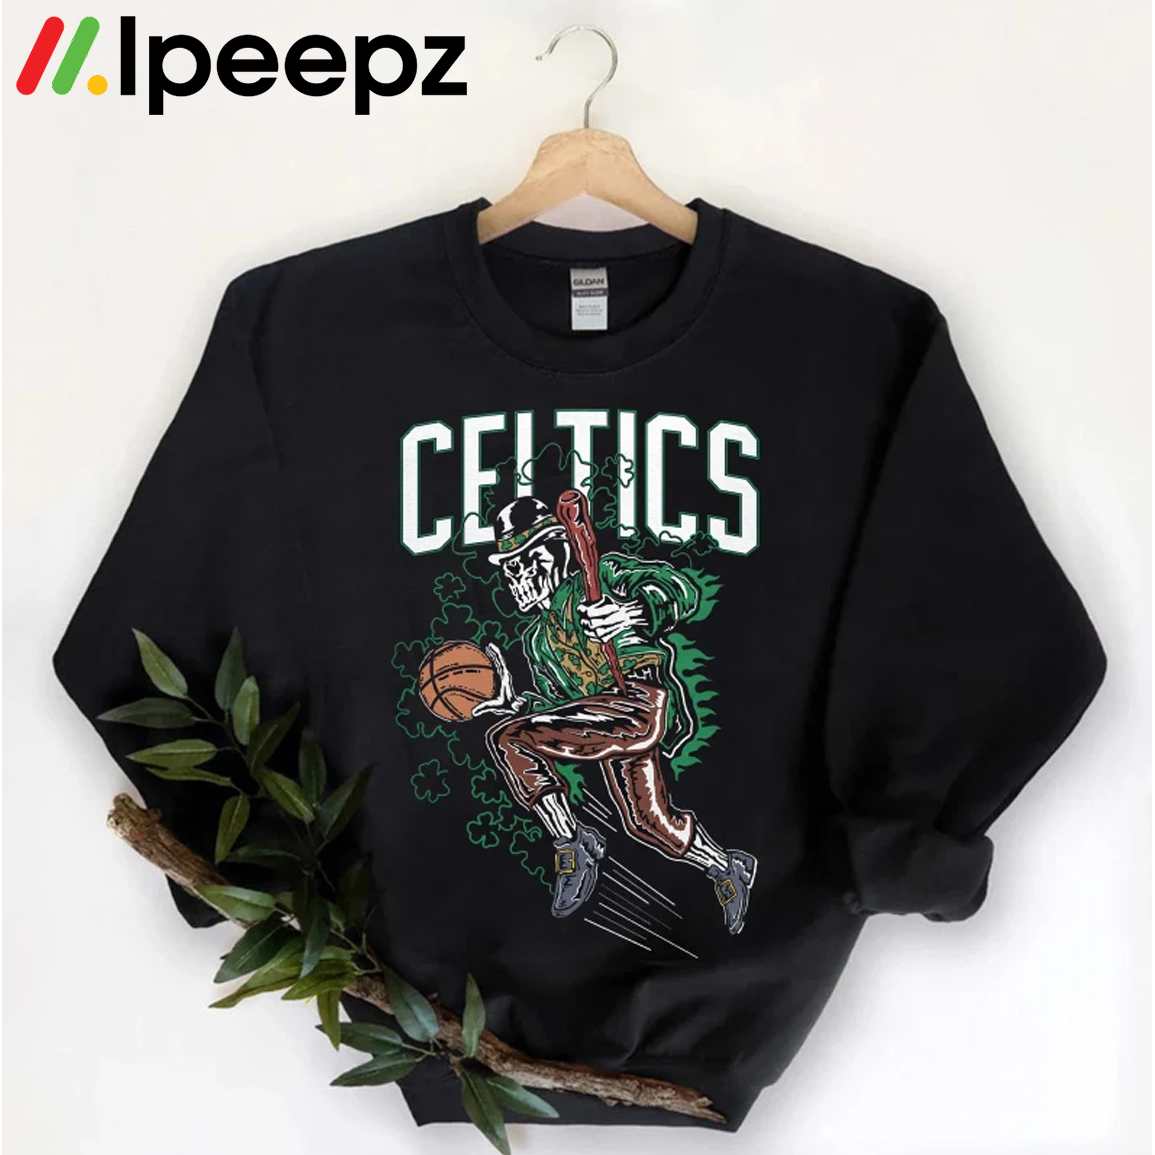 Boston Celtics 90s Basketball Team Graphic Vintage shirt, hoodie